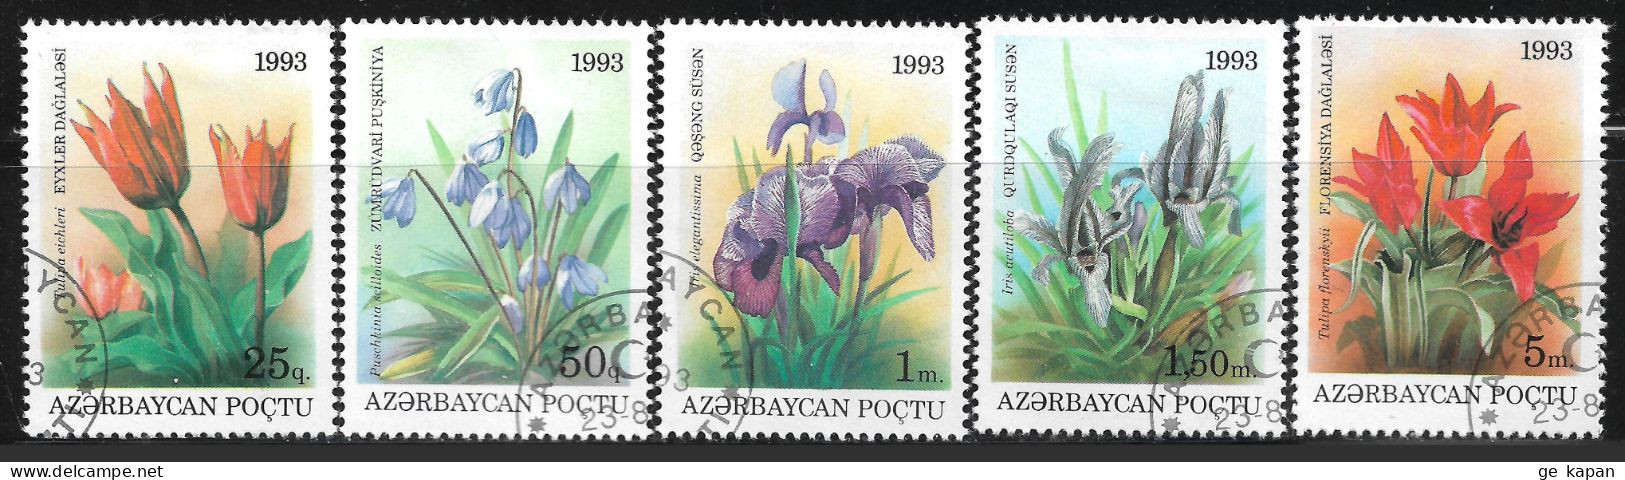 1993 AZERBAJAN Set Of 5 Used STAMPS (Michel # 91-95) - Aserbaidschan